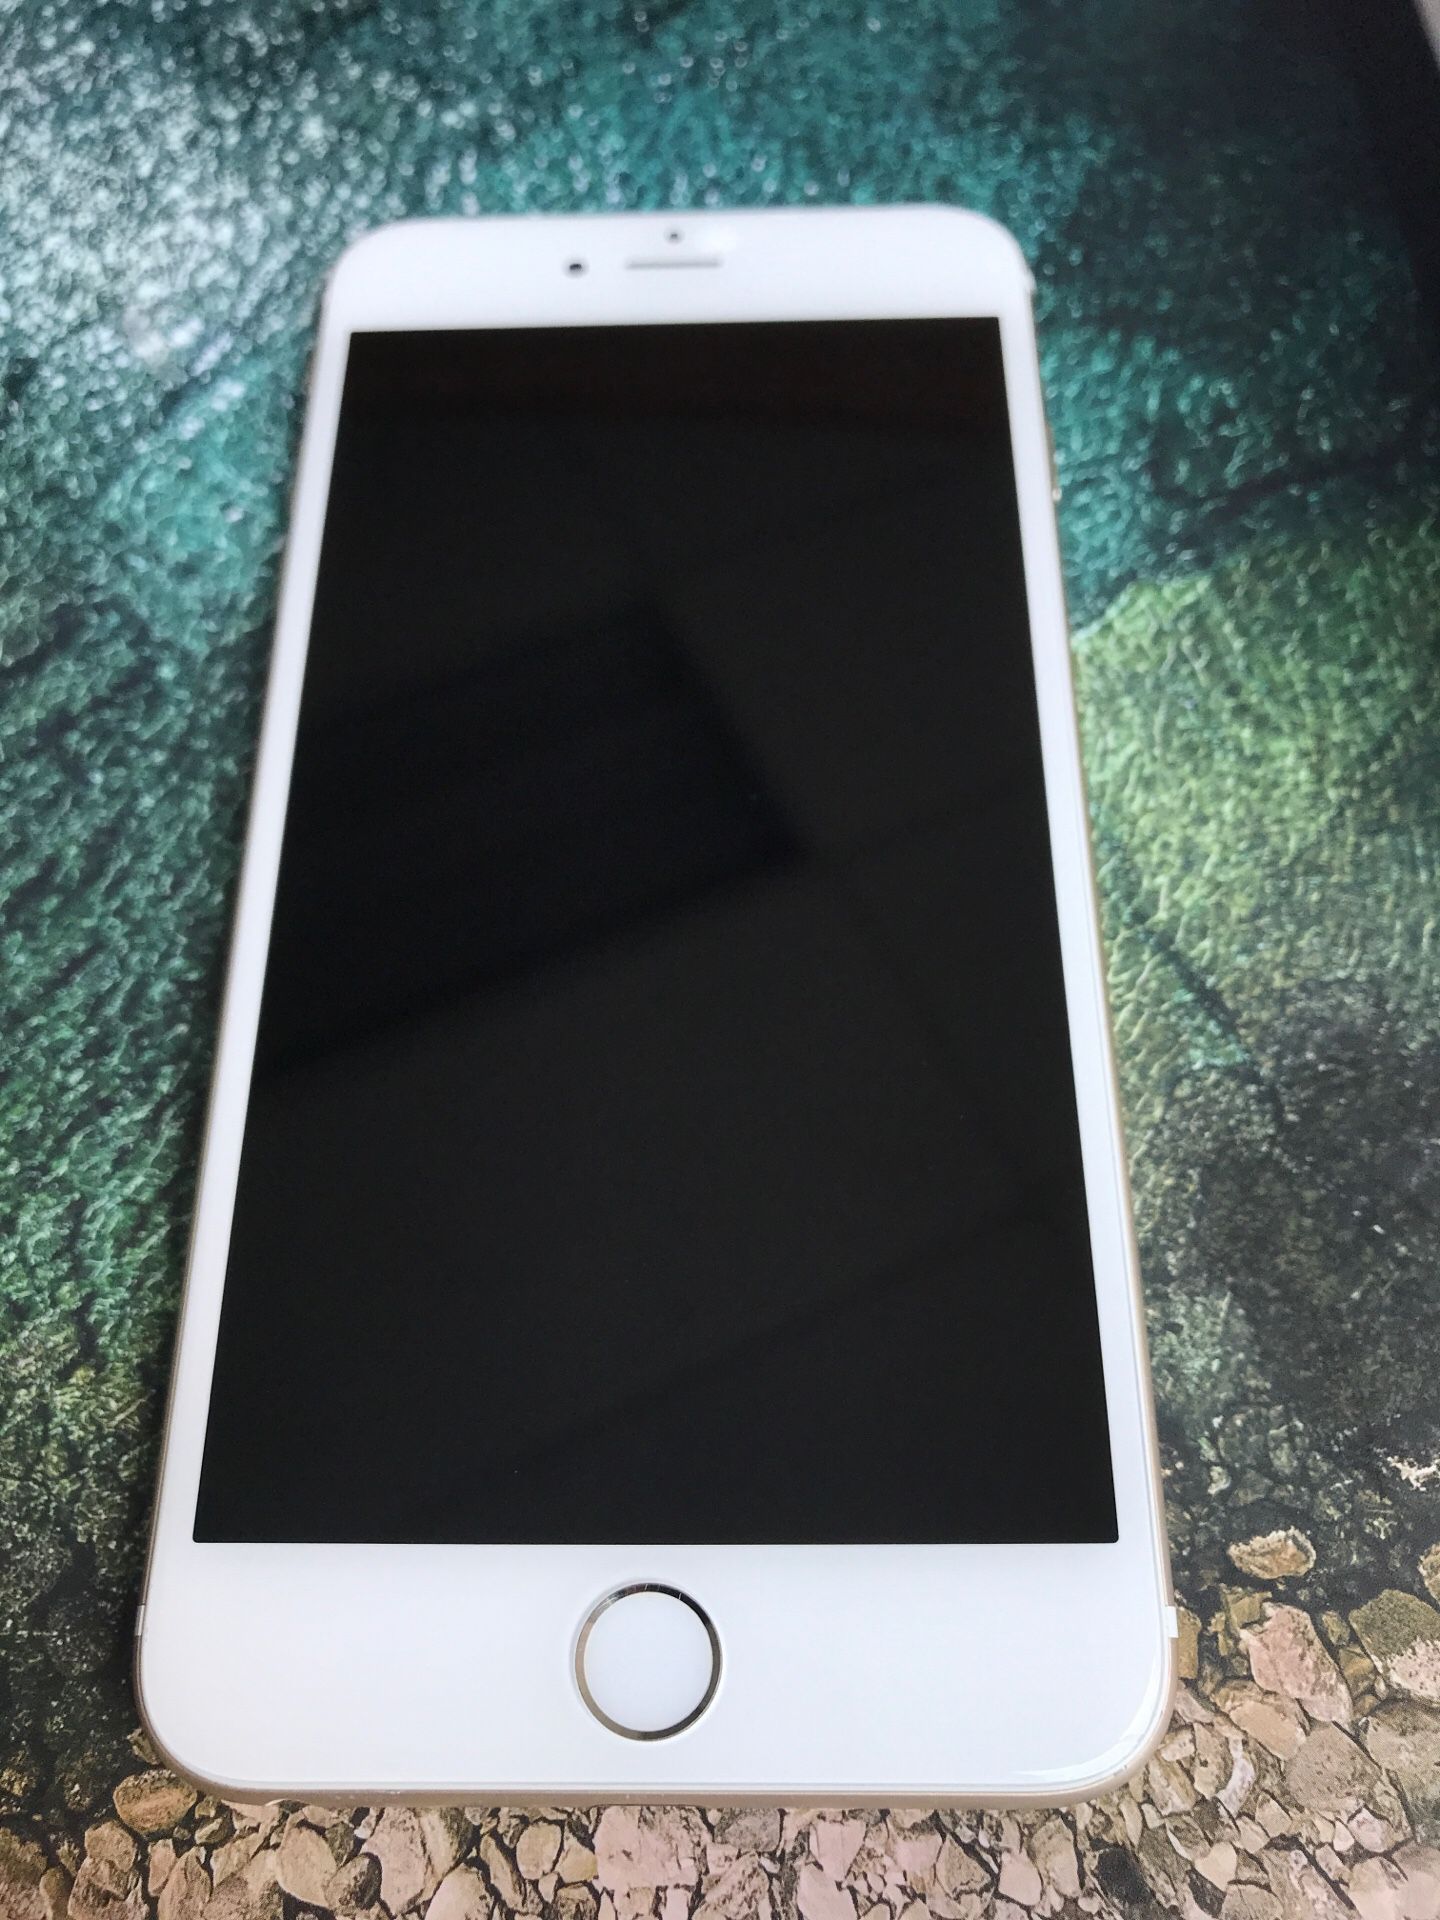 Apple iPhone 6 Plus 128gb Gold Unlocked